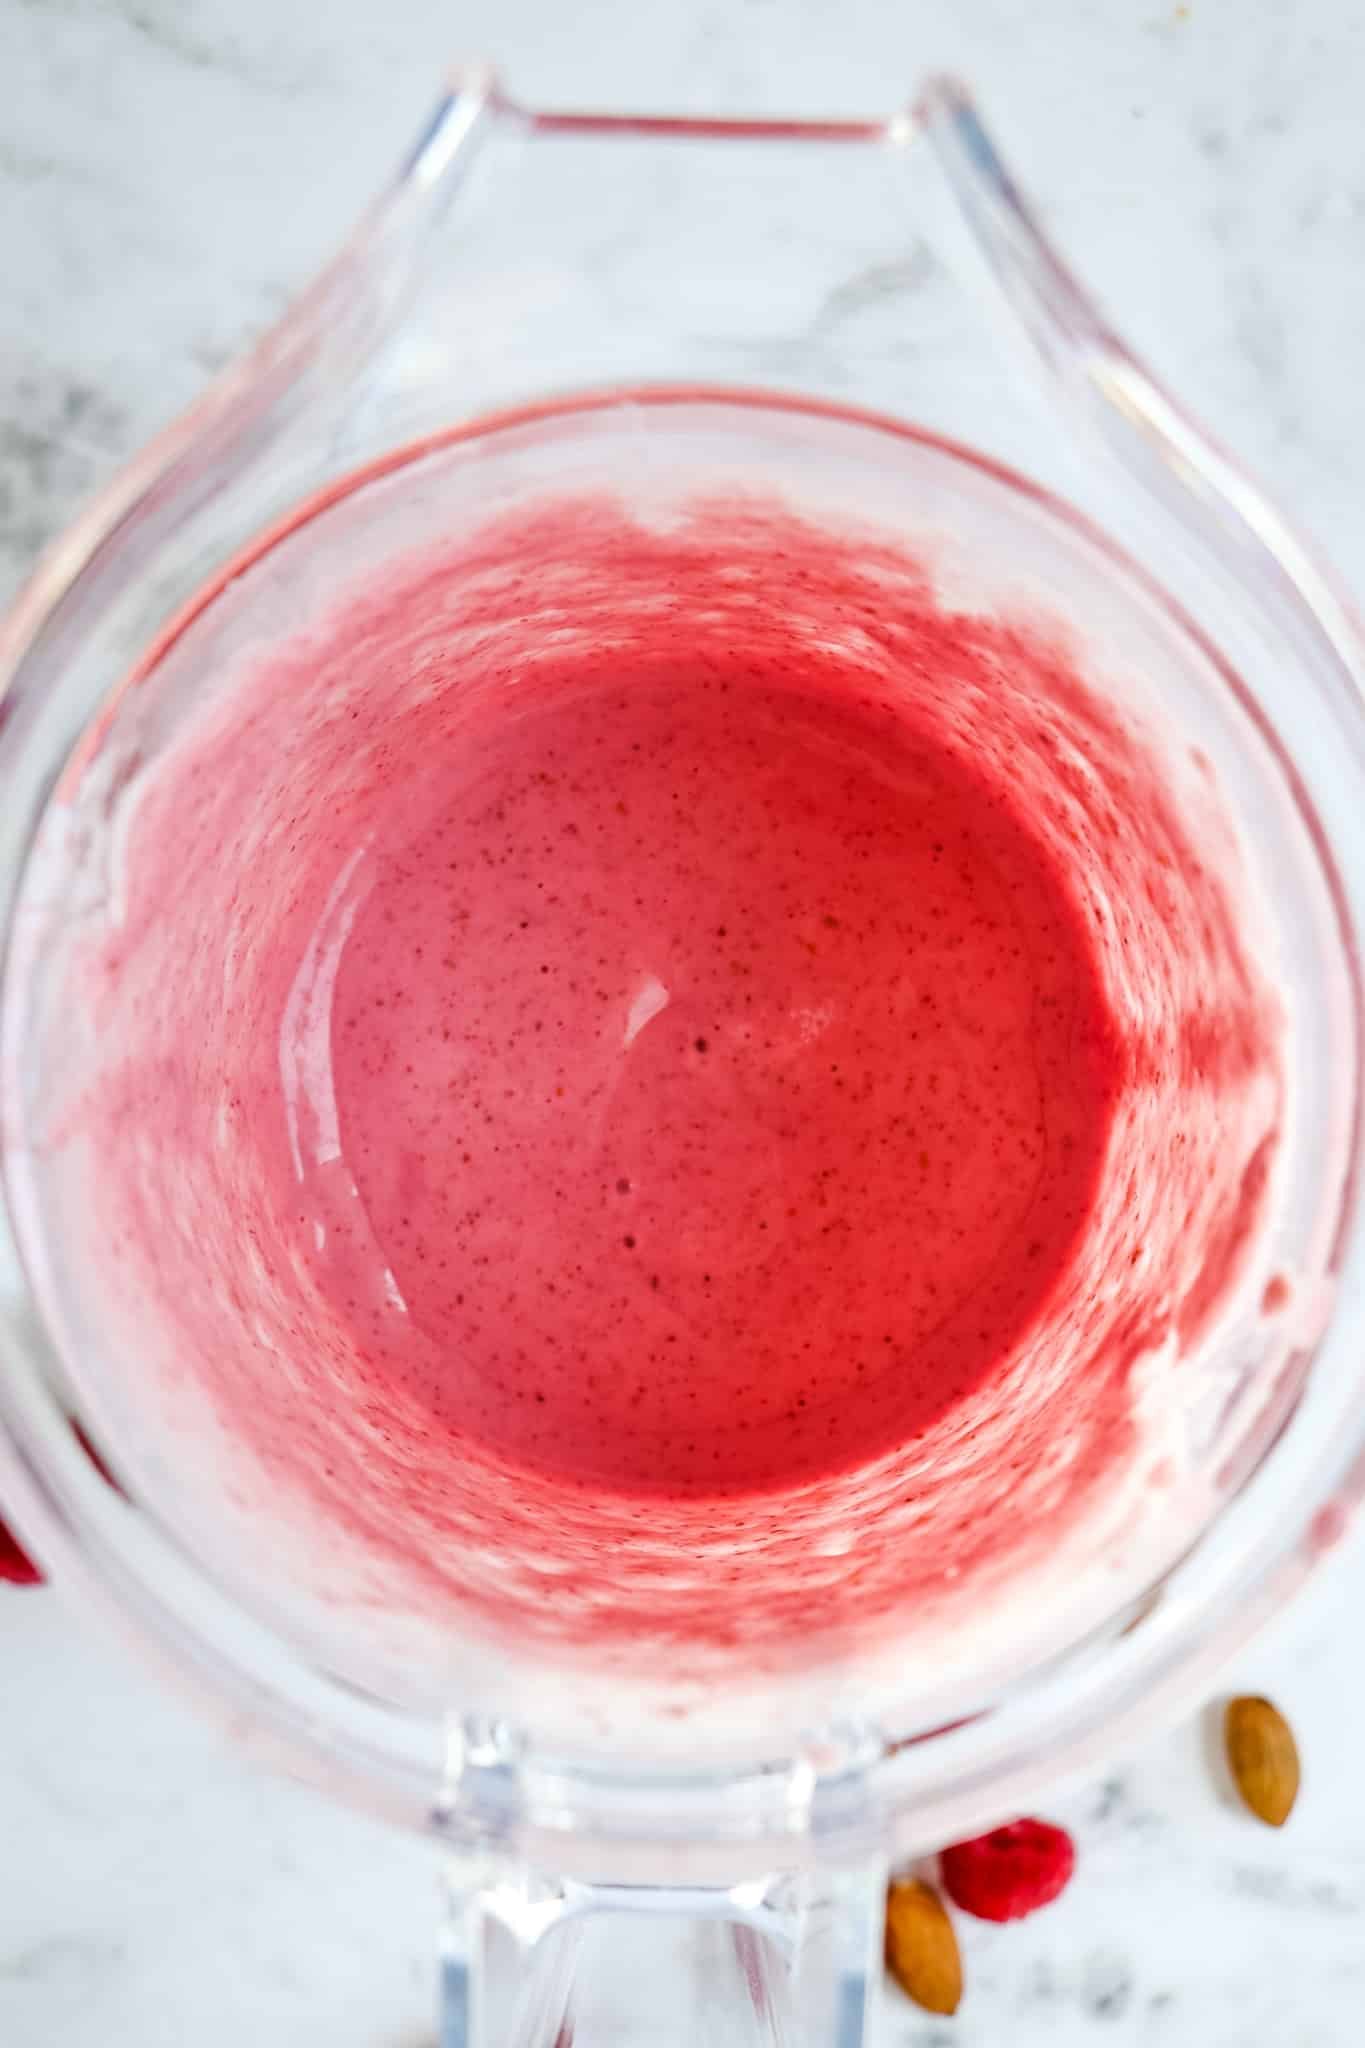 Raspberry smoothie recipe blended in a blender jar.